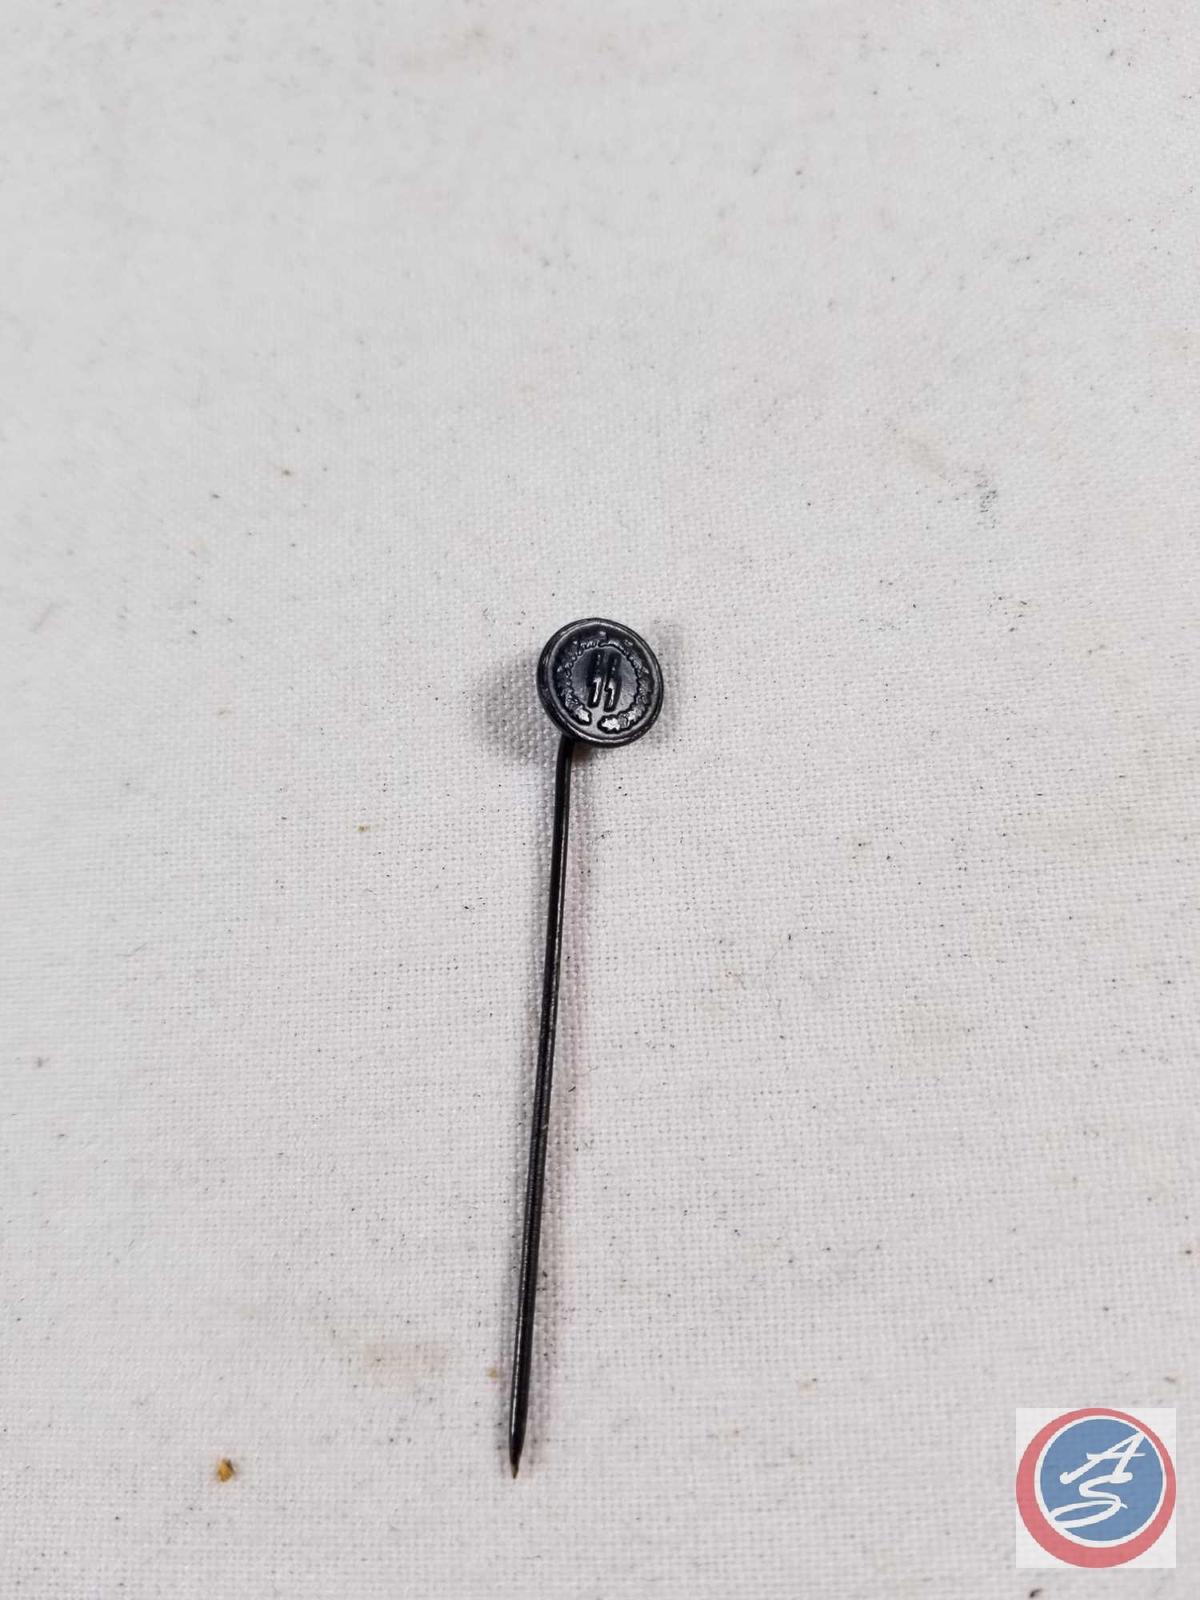 Nazi SS Lapel Pin/Stickpin